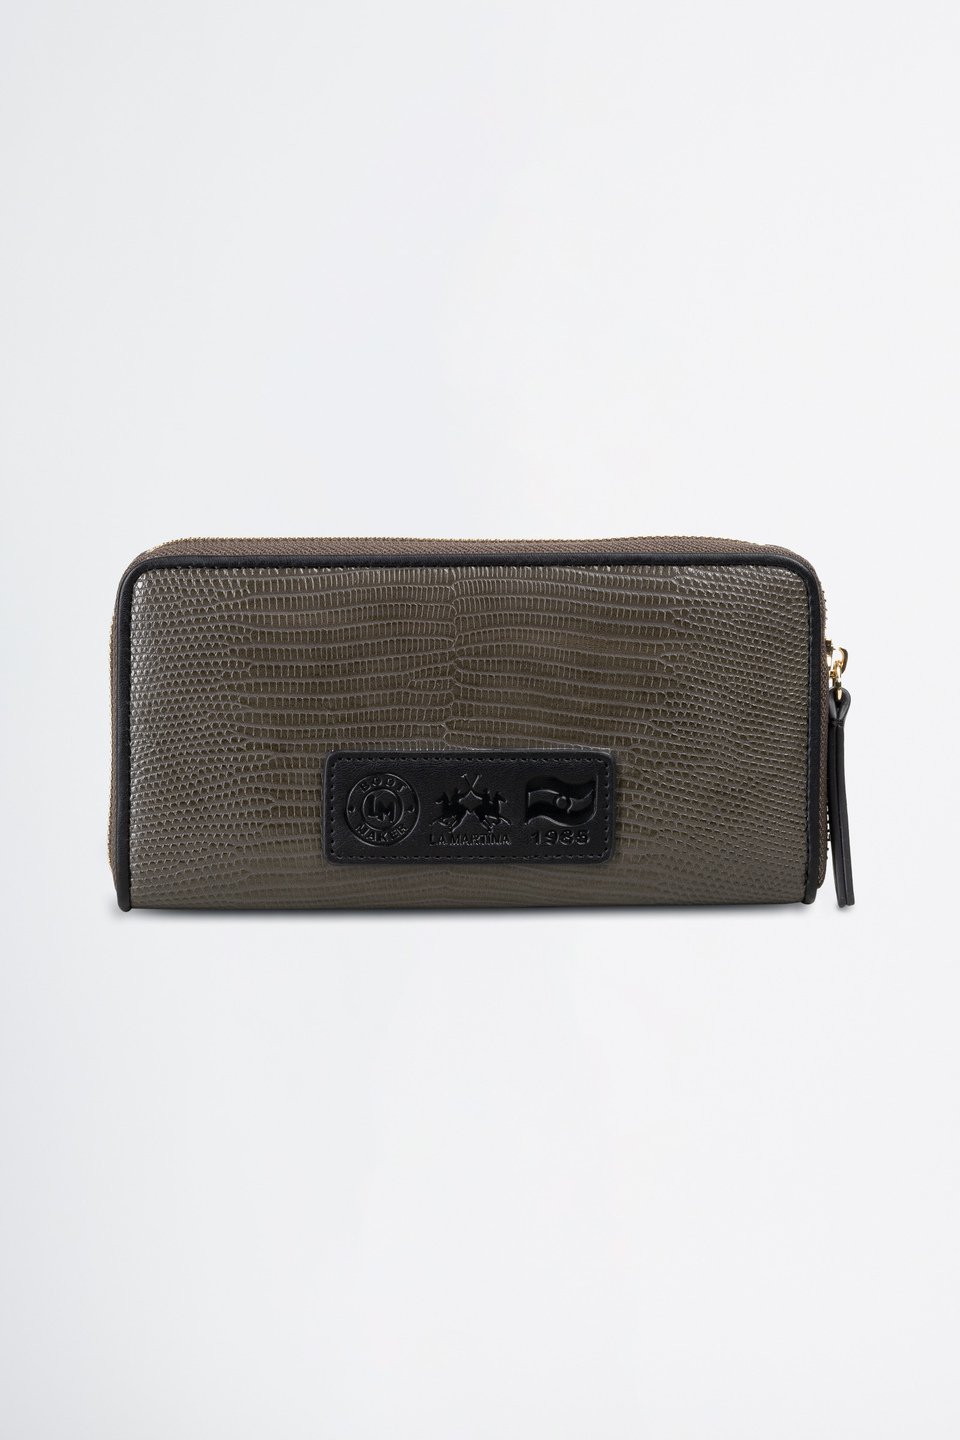 Leather wallet | La Martina - Official Online Shop